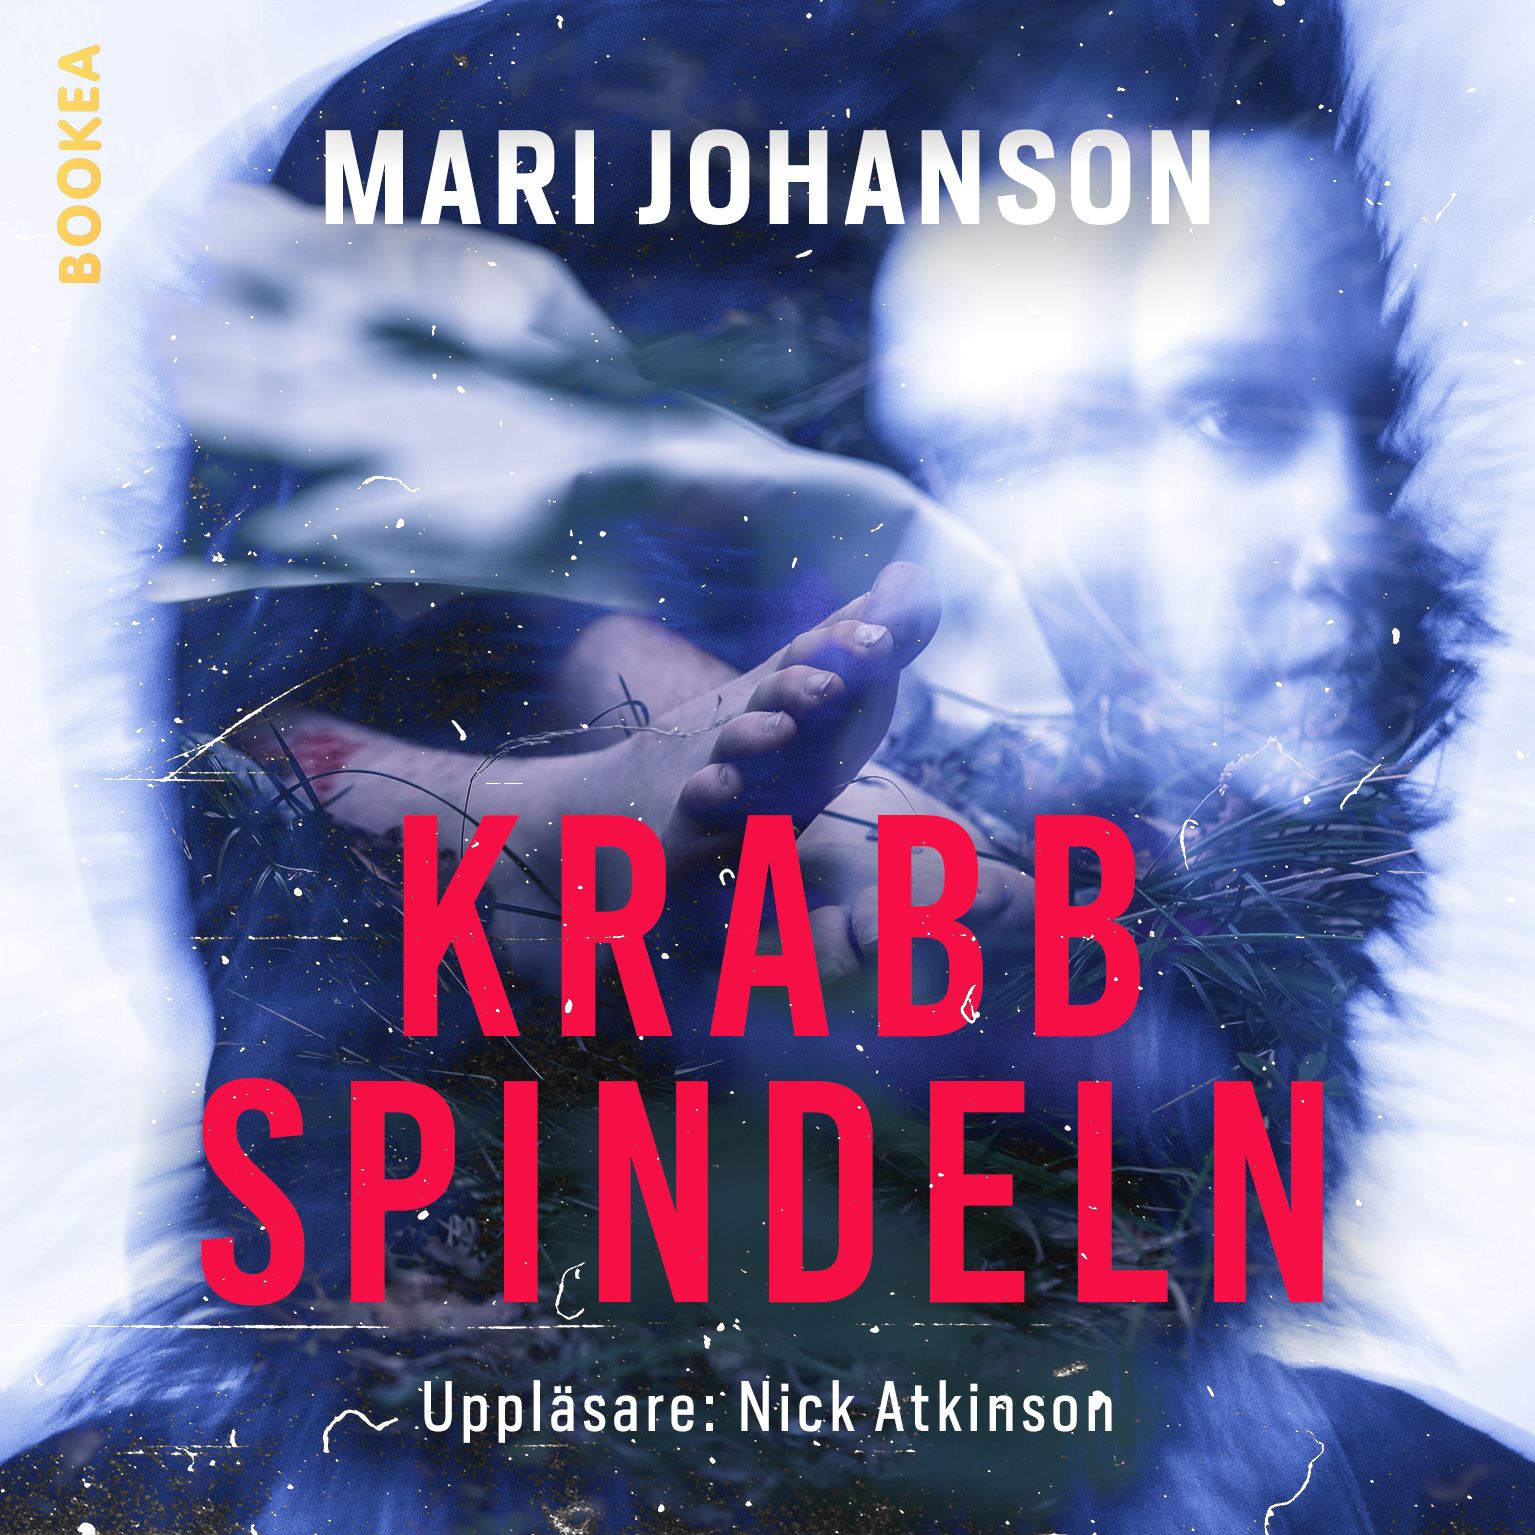 Krabbspindeln, e-bog af Mari Johanson